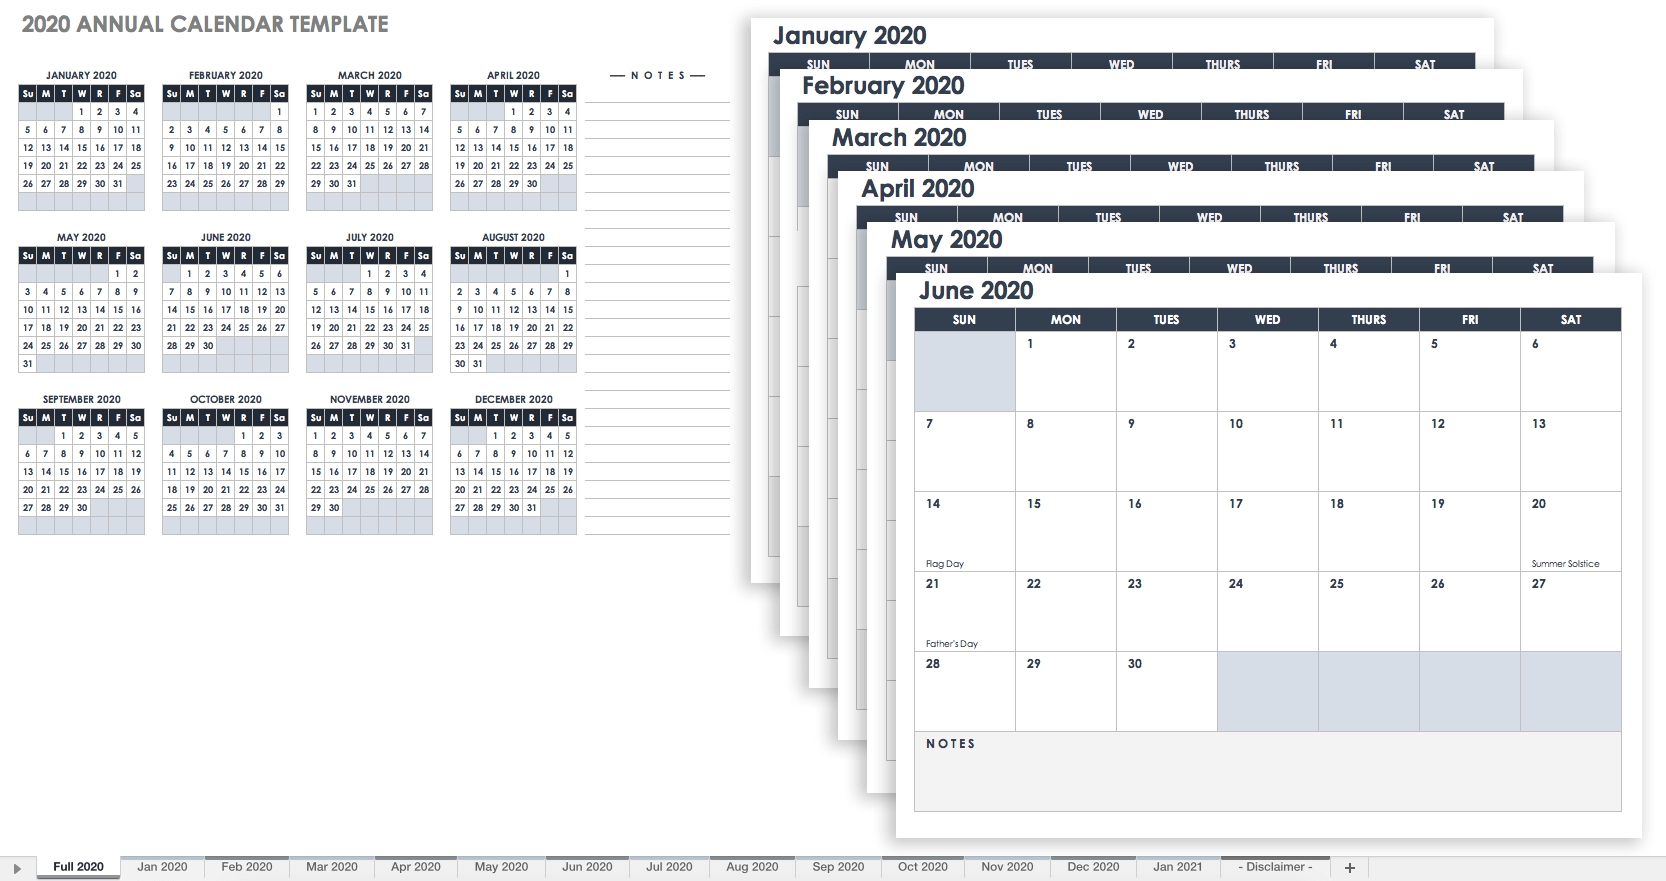 Free Blank Calendar Templates - Smartsheet-Monthly Calender 2020 Organizer For Bills